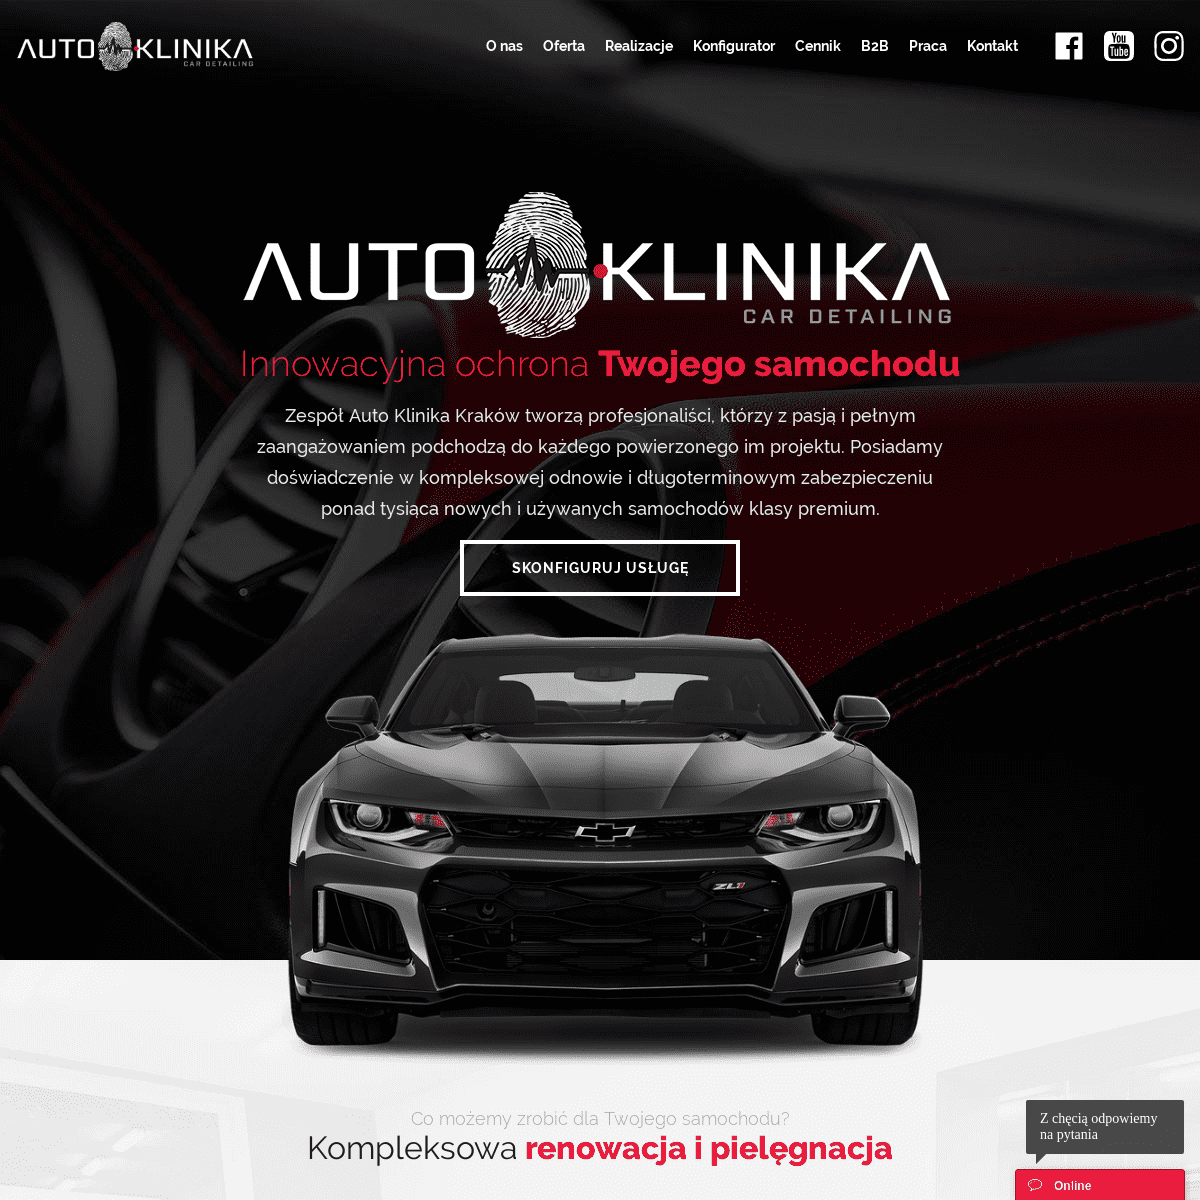 A complete backup of autoklinika-krakow.pl